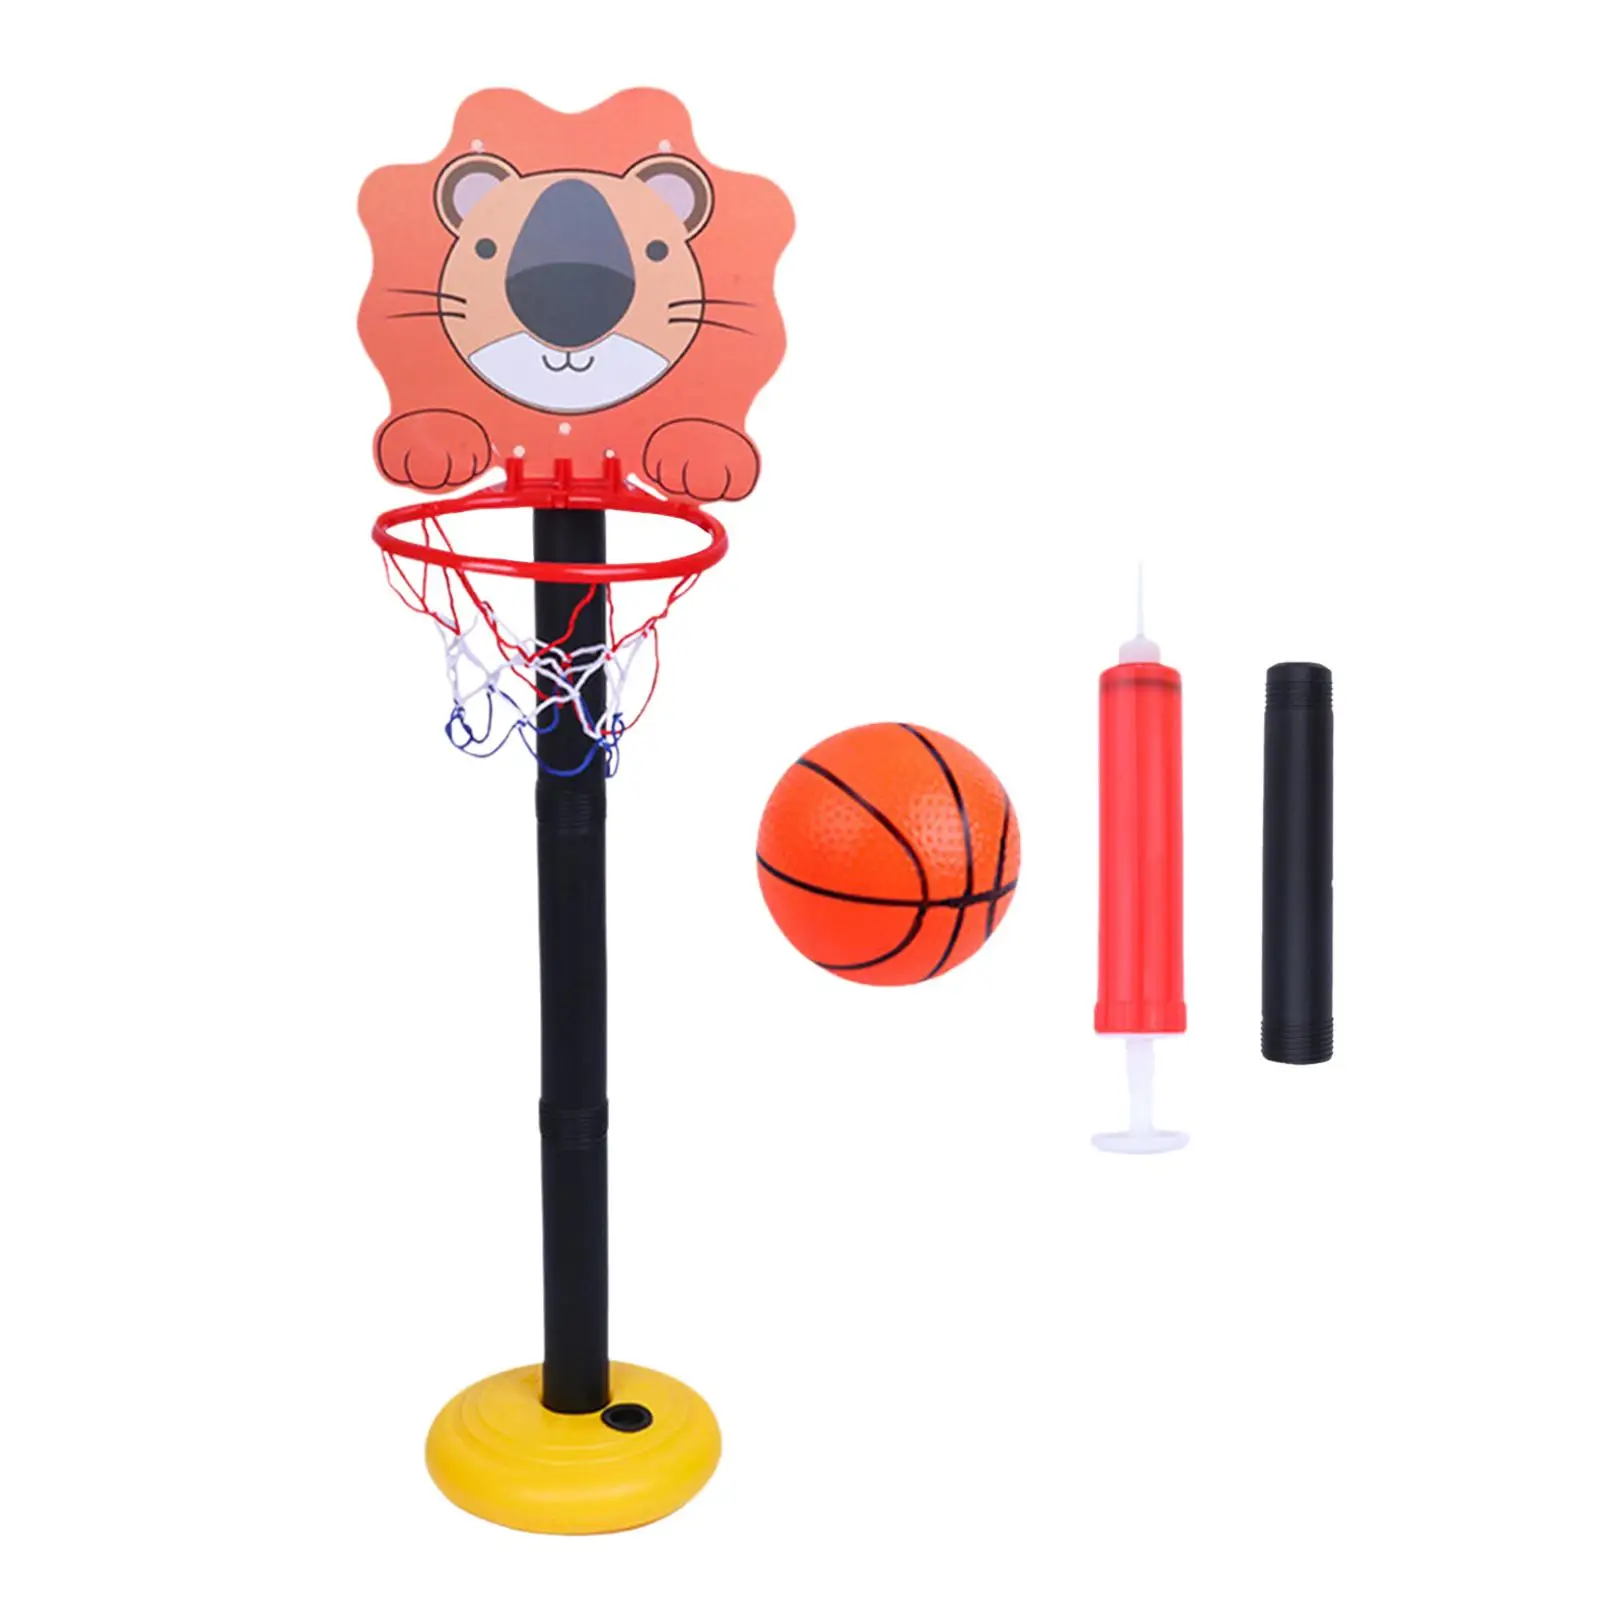 adjustable Basketball Hoops Basketball Hoop Toys Yard game Balls Playset Outdoor Sports for Bedroom Office Outdoor